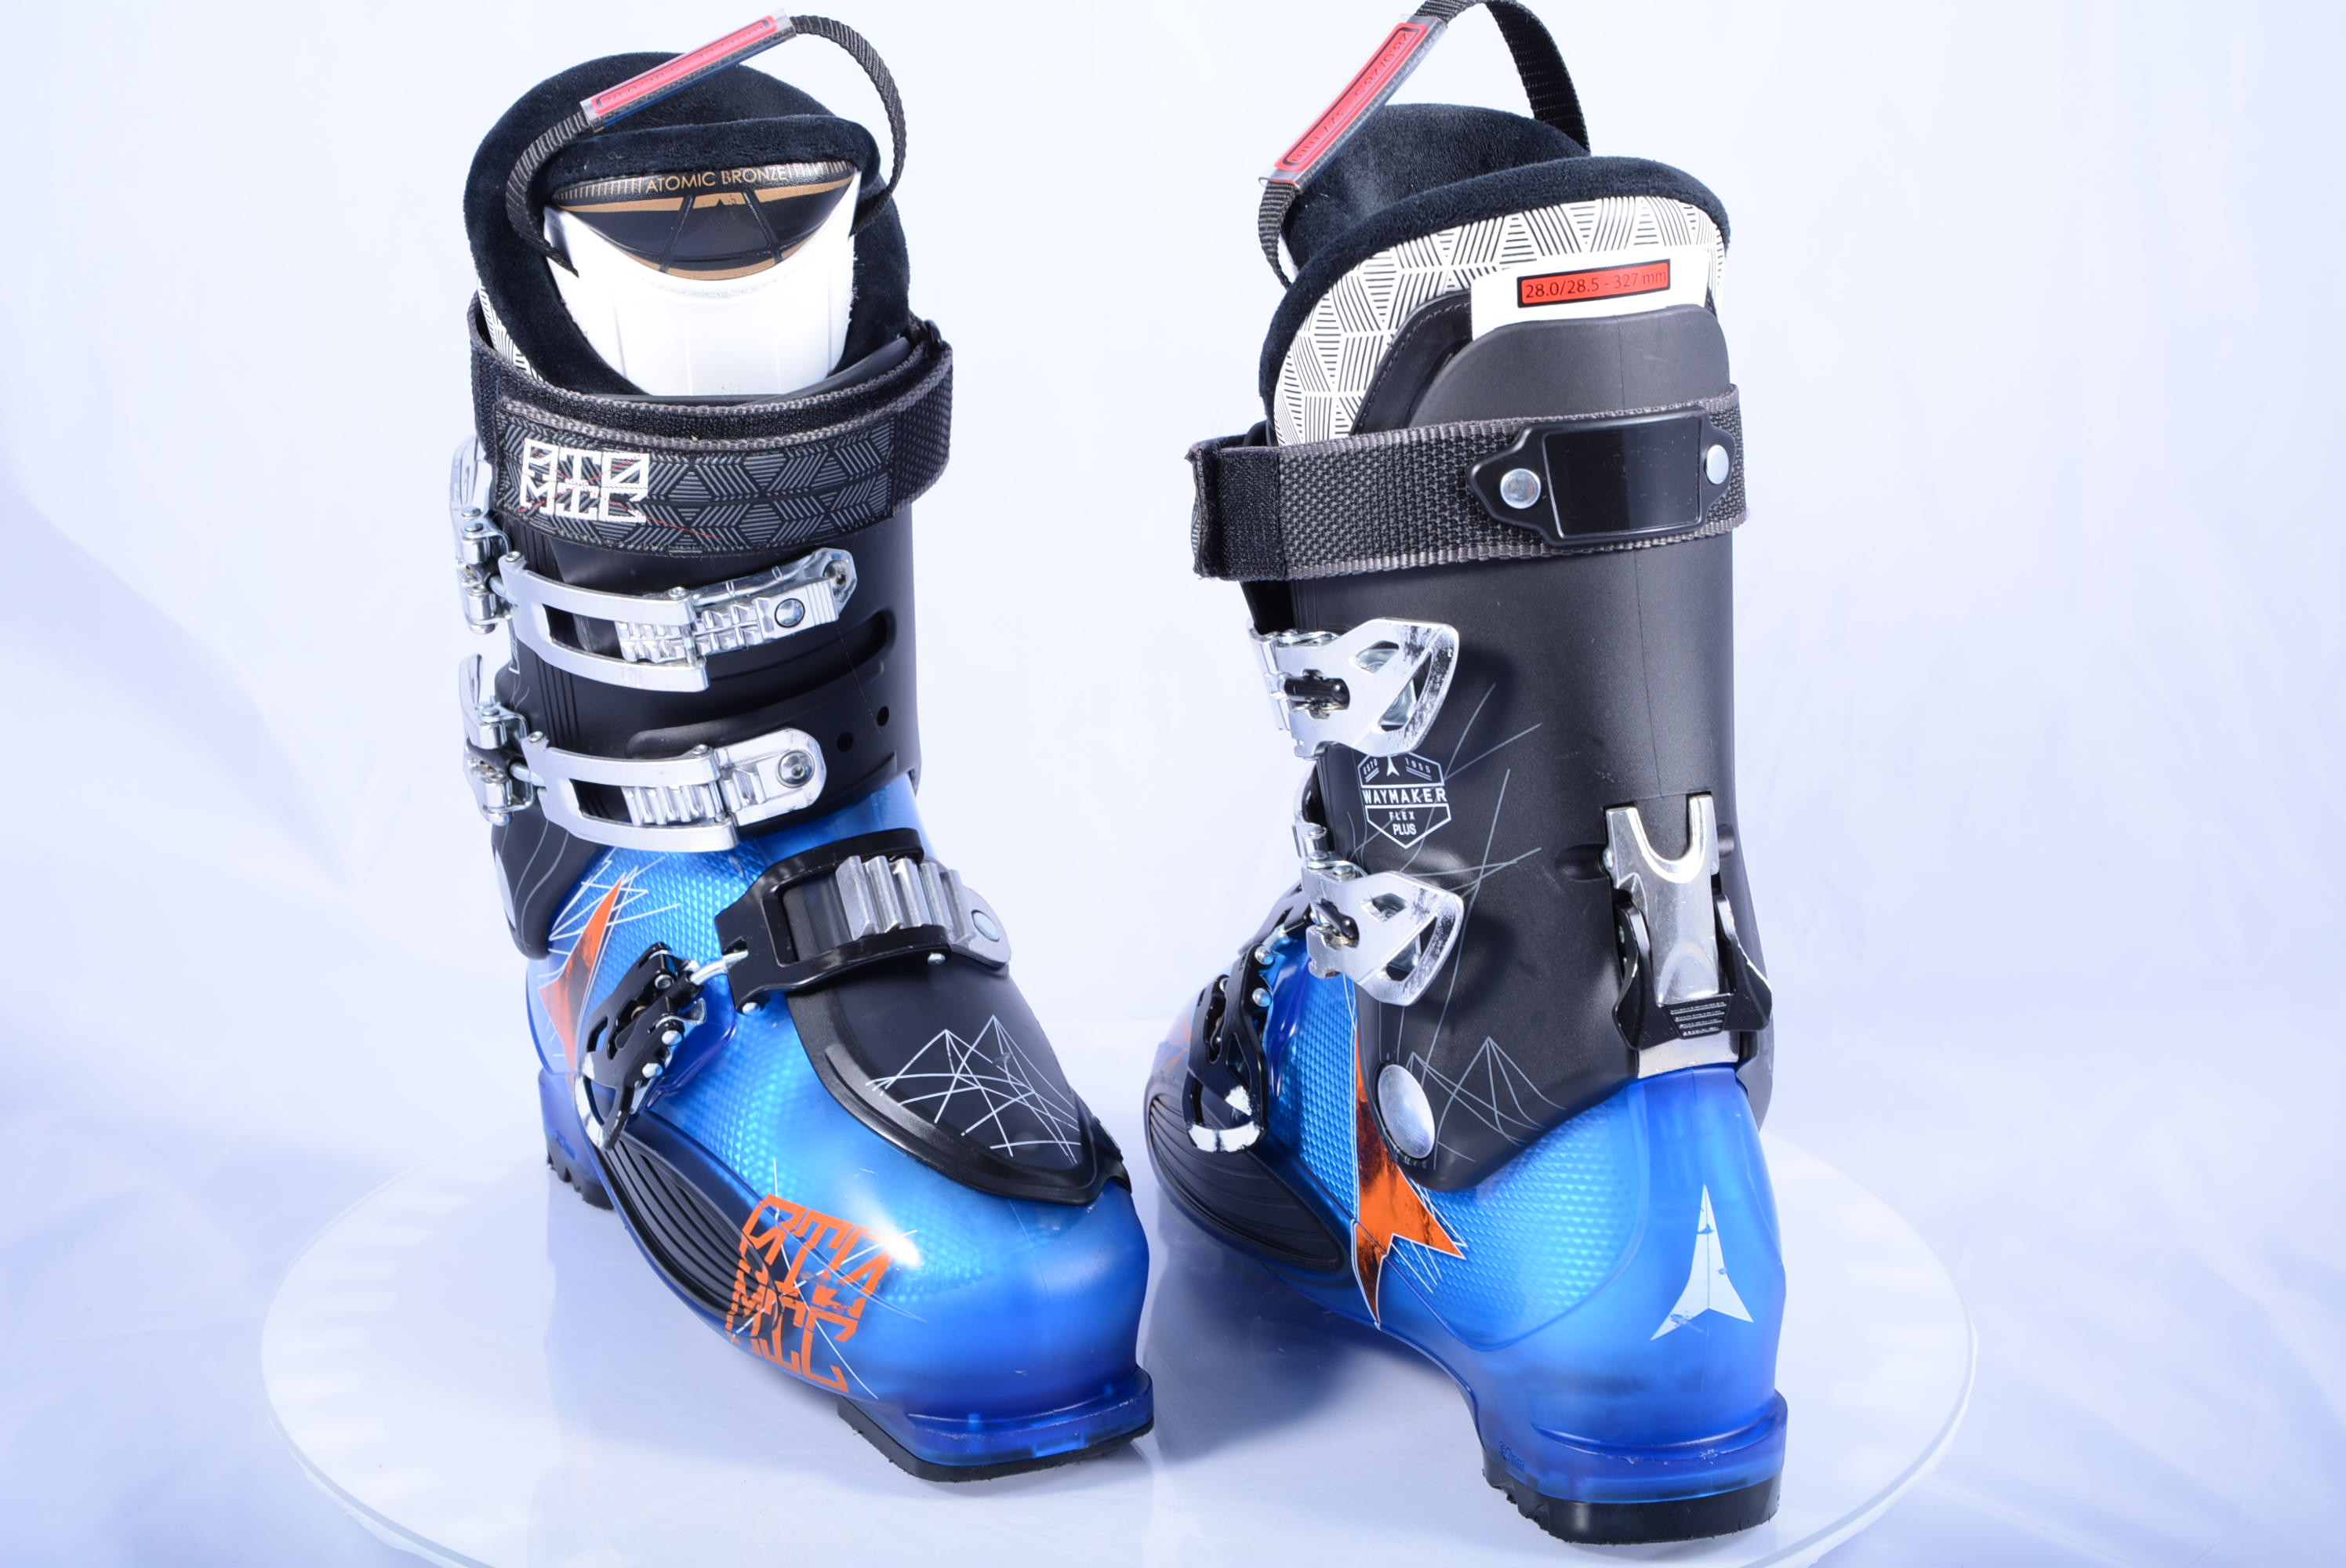 267 mm ski boot size